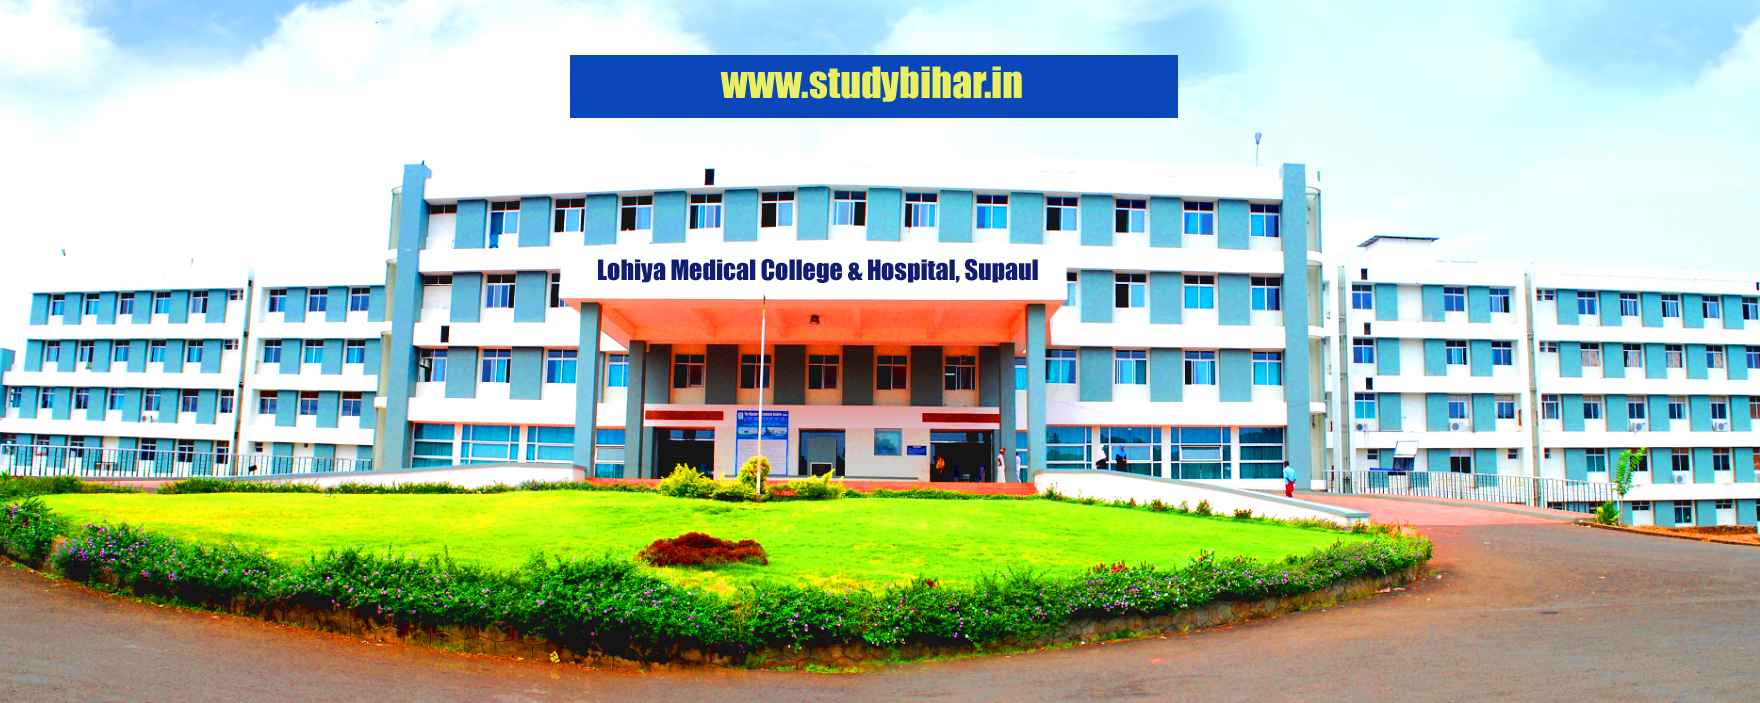 Medical College & Hospital In Supaul Bihar